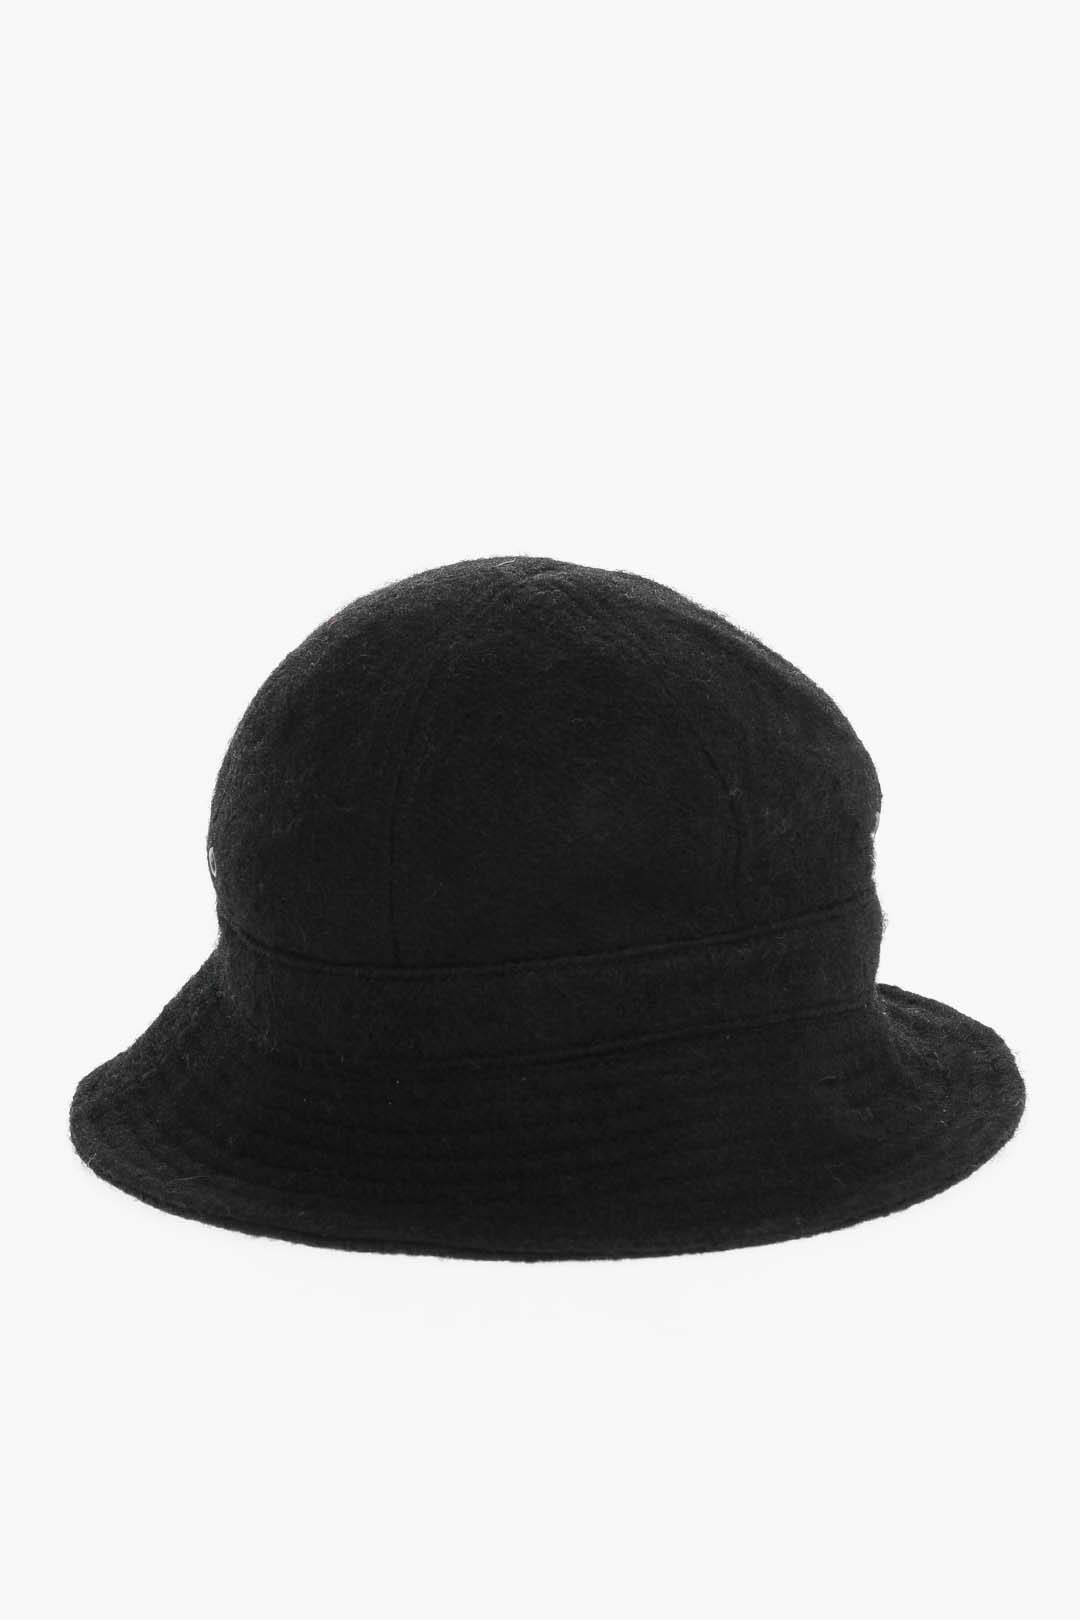 Paul Smith Wool ROBERT Bucket Hat men - Glamood Outlet